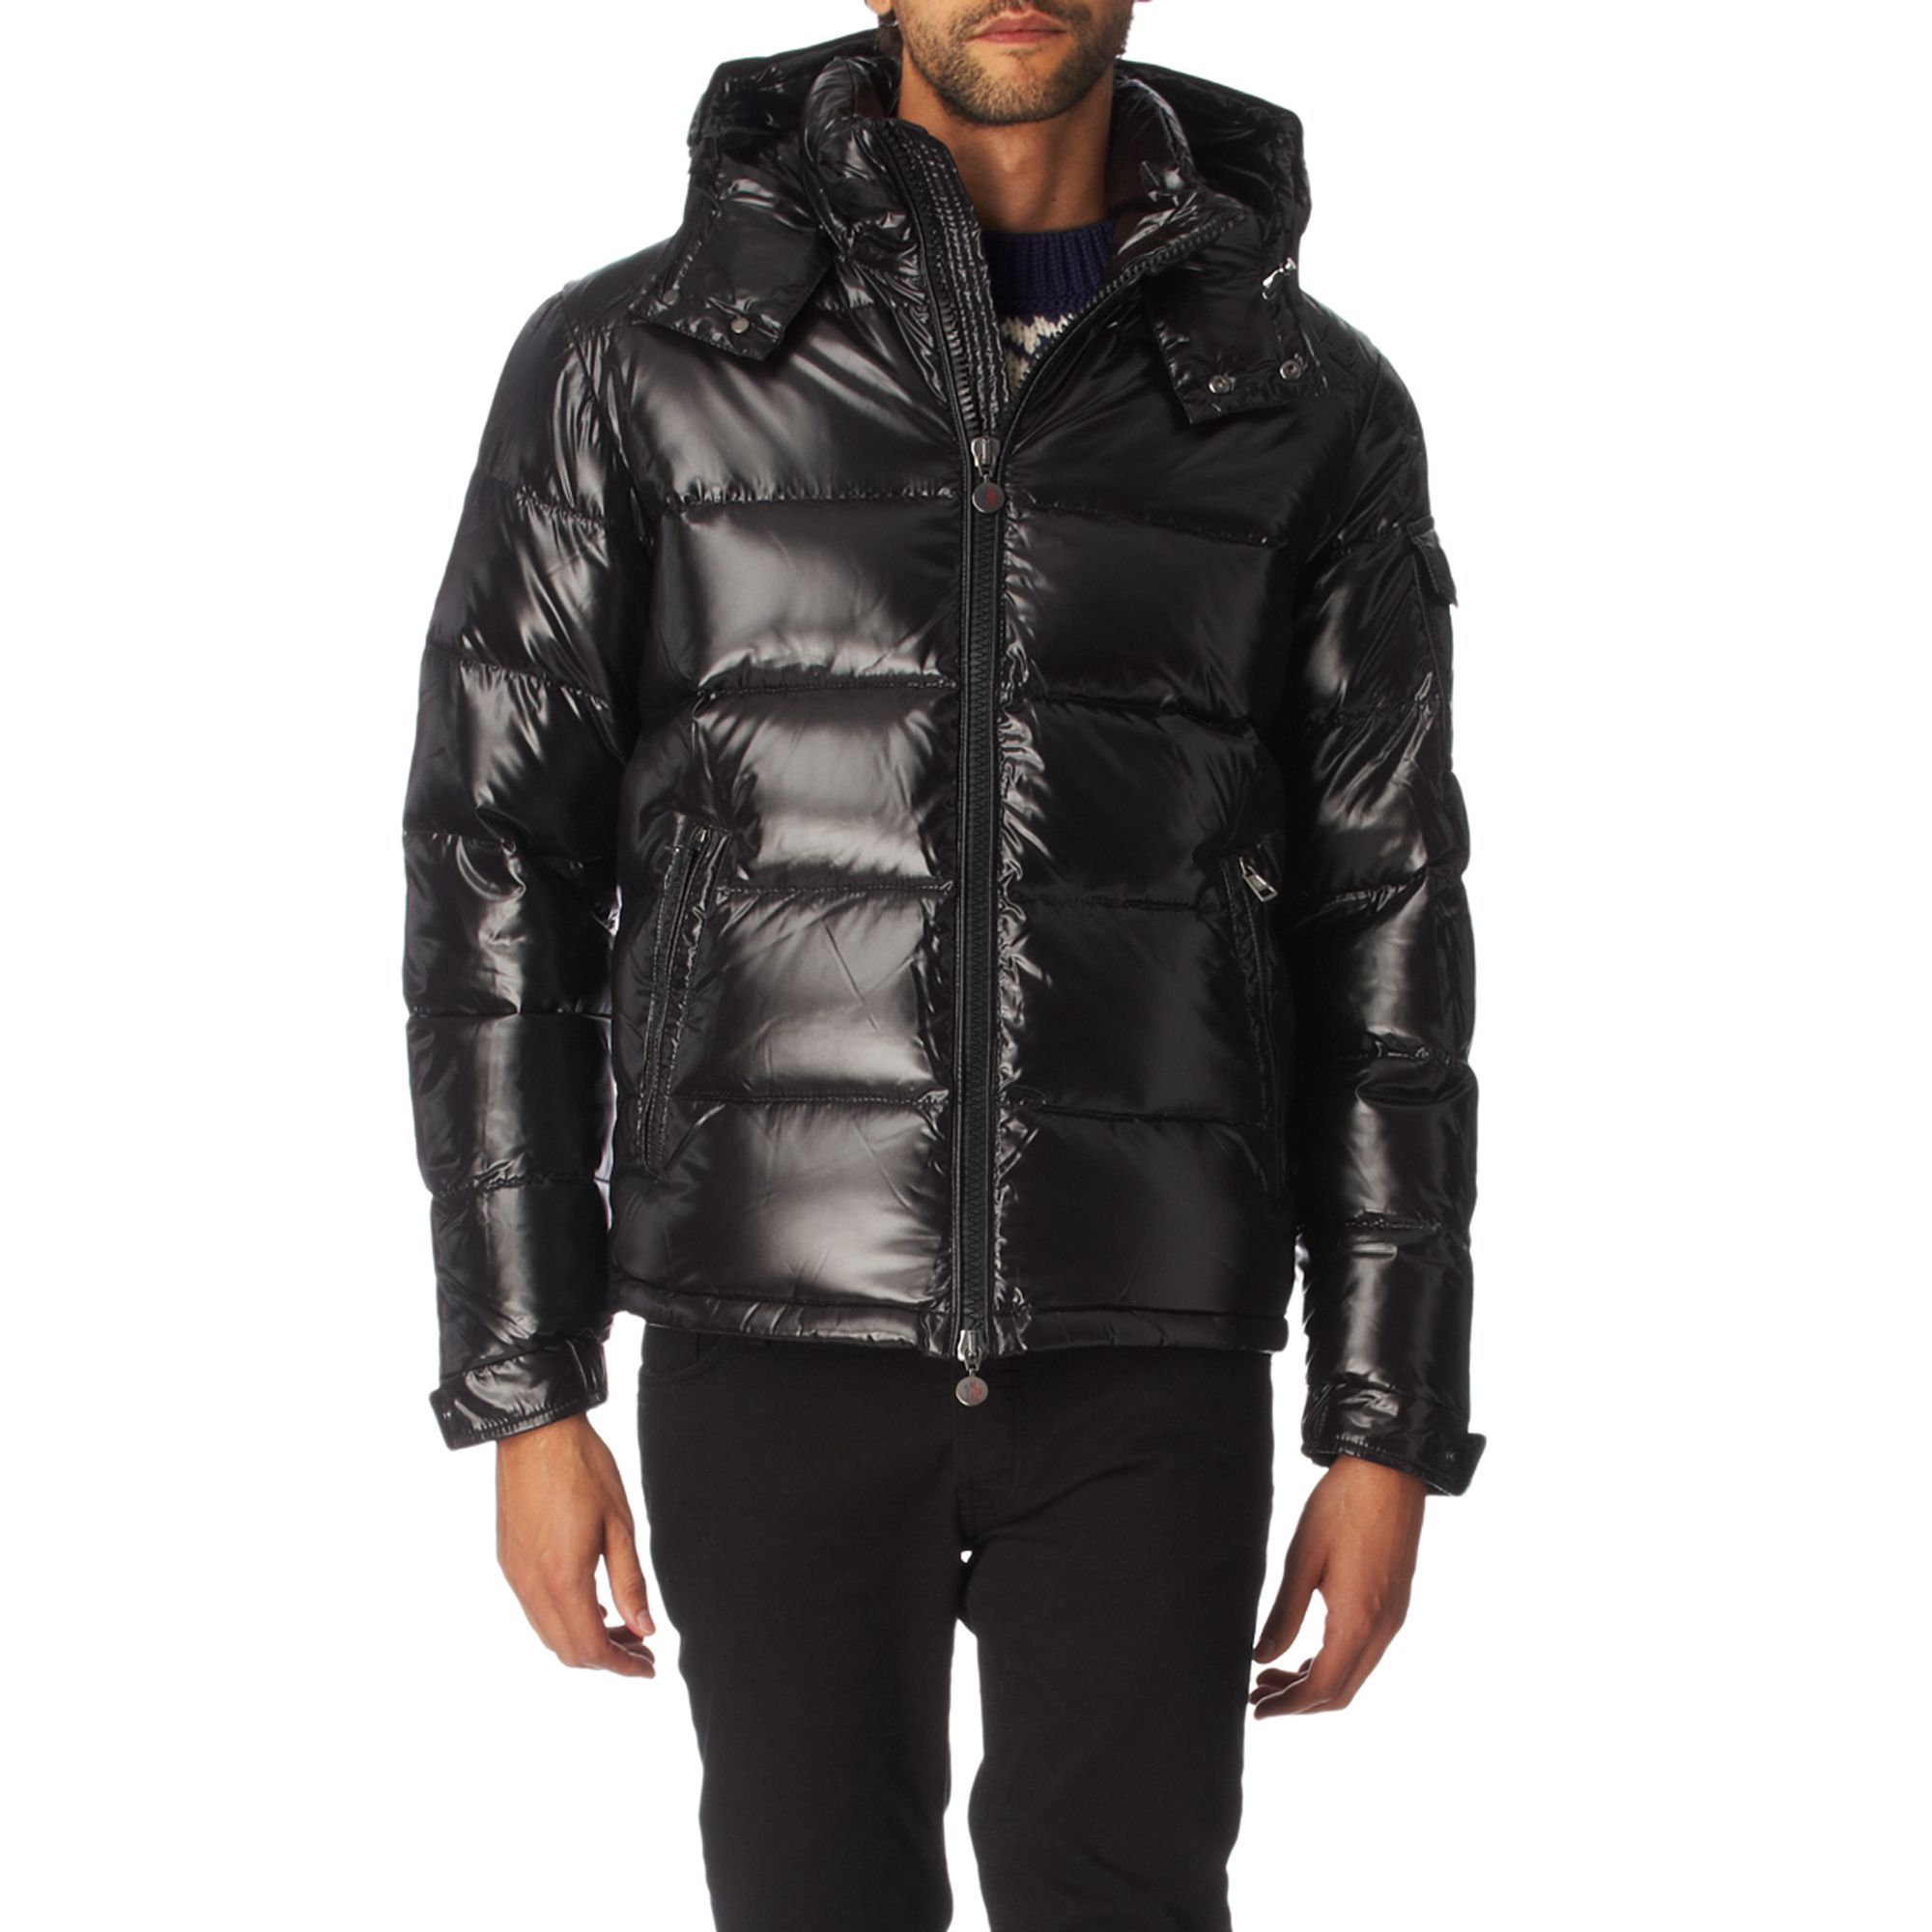 Moncler Maya Padded Jacket in Black for Men - Lyst